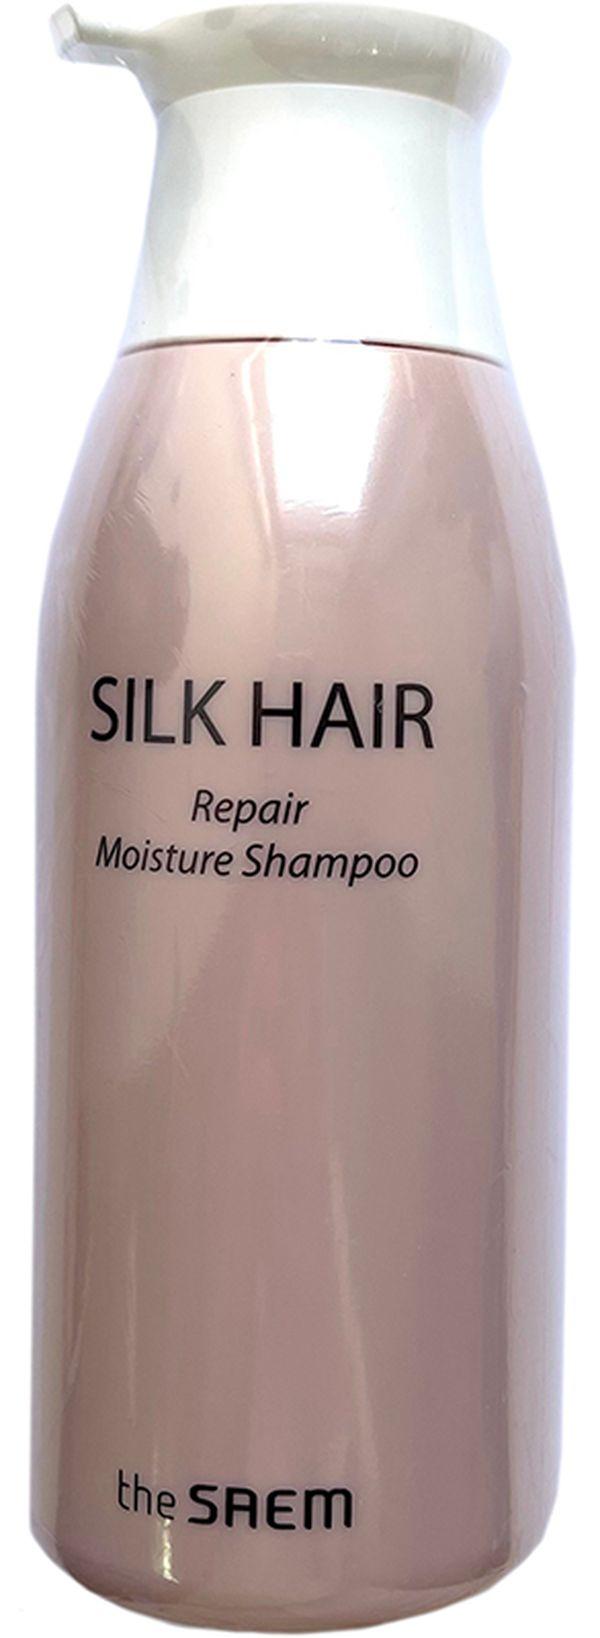 THE SAEM Silk Hair Шампунь д/волос 400мл